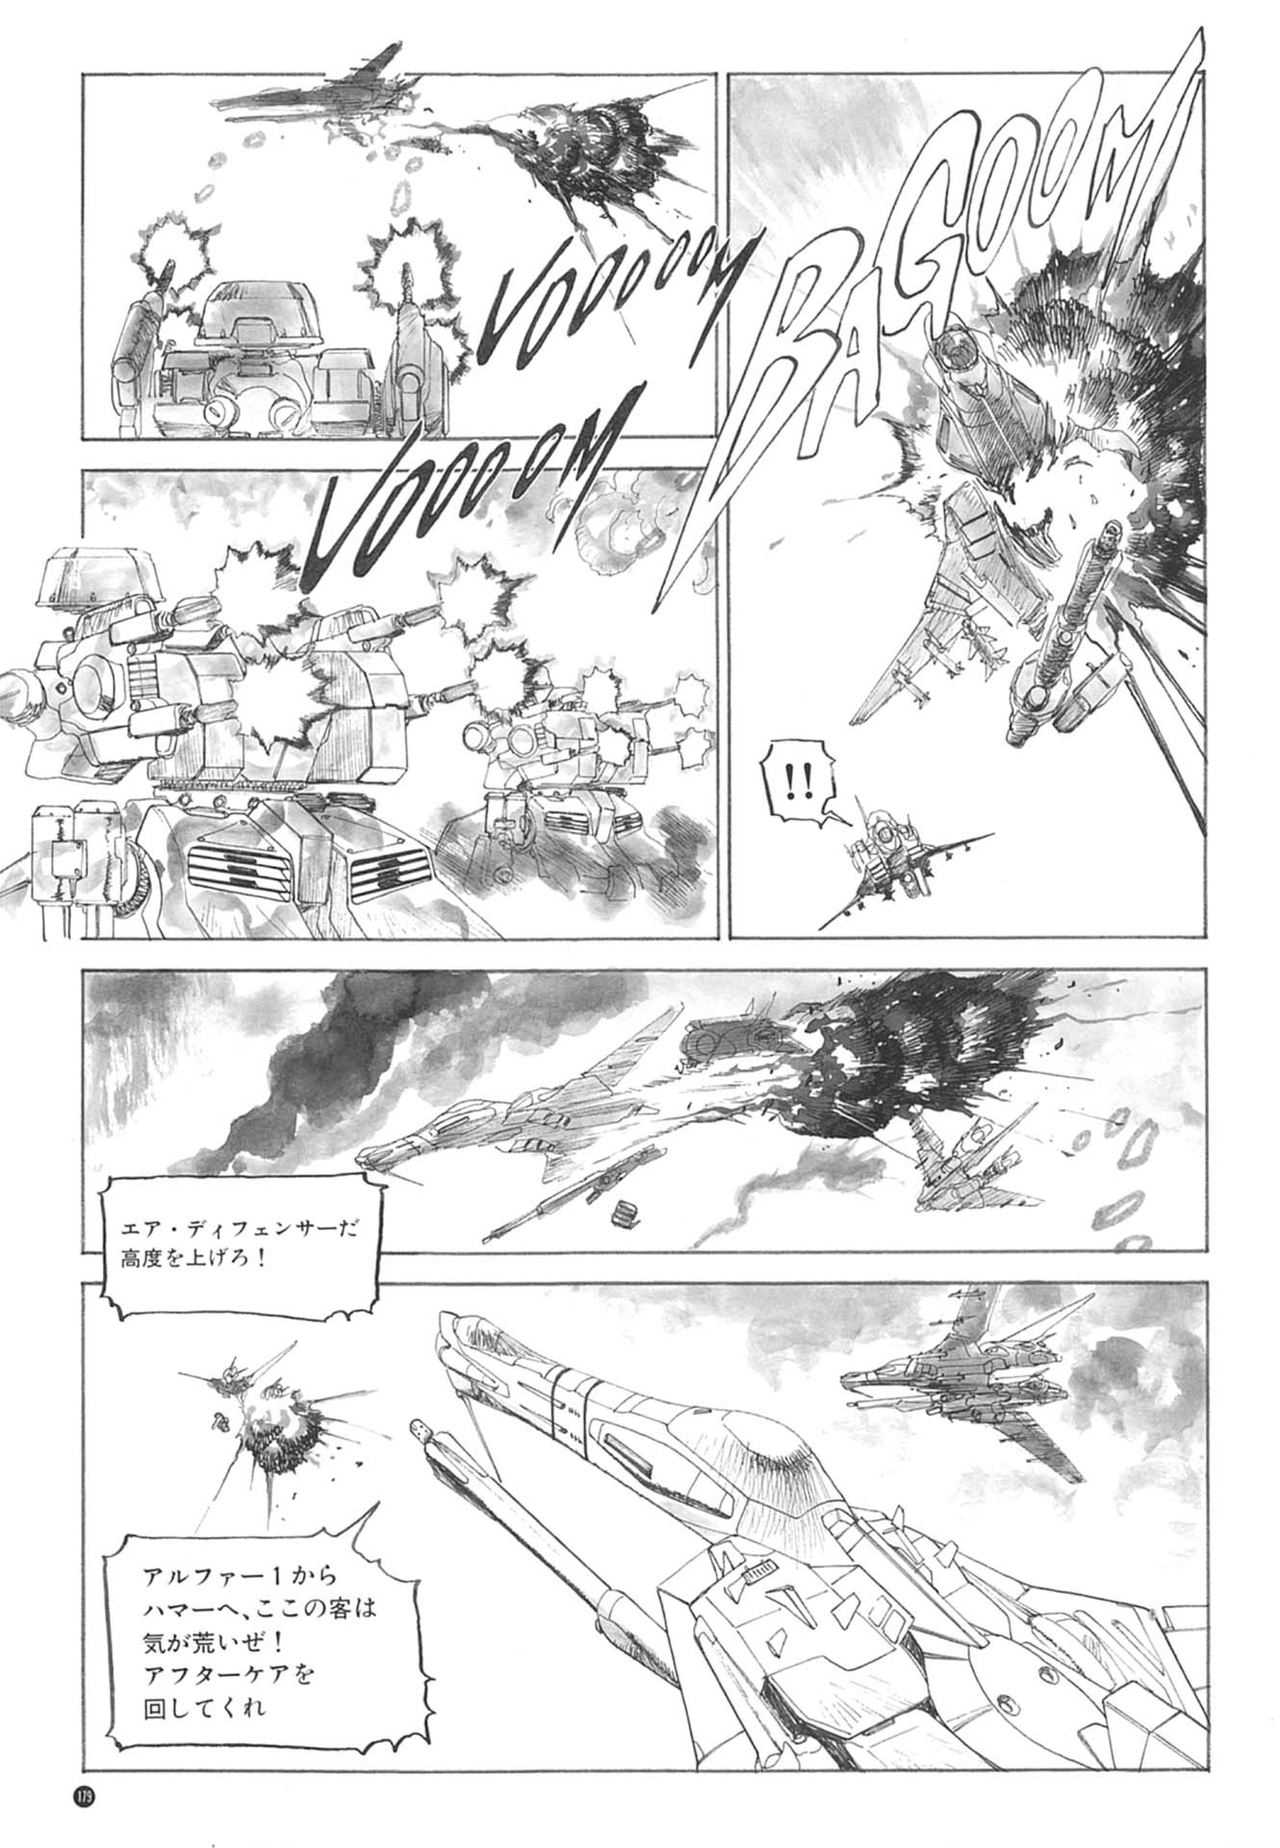 [Kazuhisa Kondo] Kazuhisa Kondo 2D & 3D Works - Go Ahead - From Mobile Suit Gundam to Original Mechanism 178